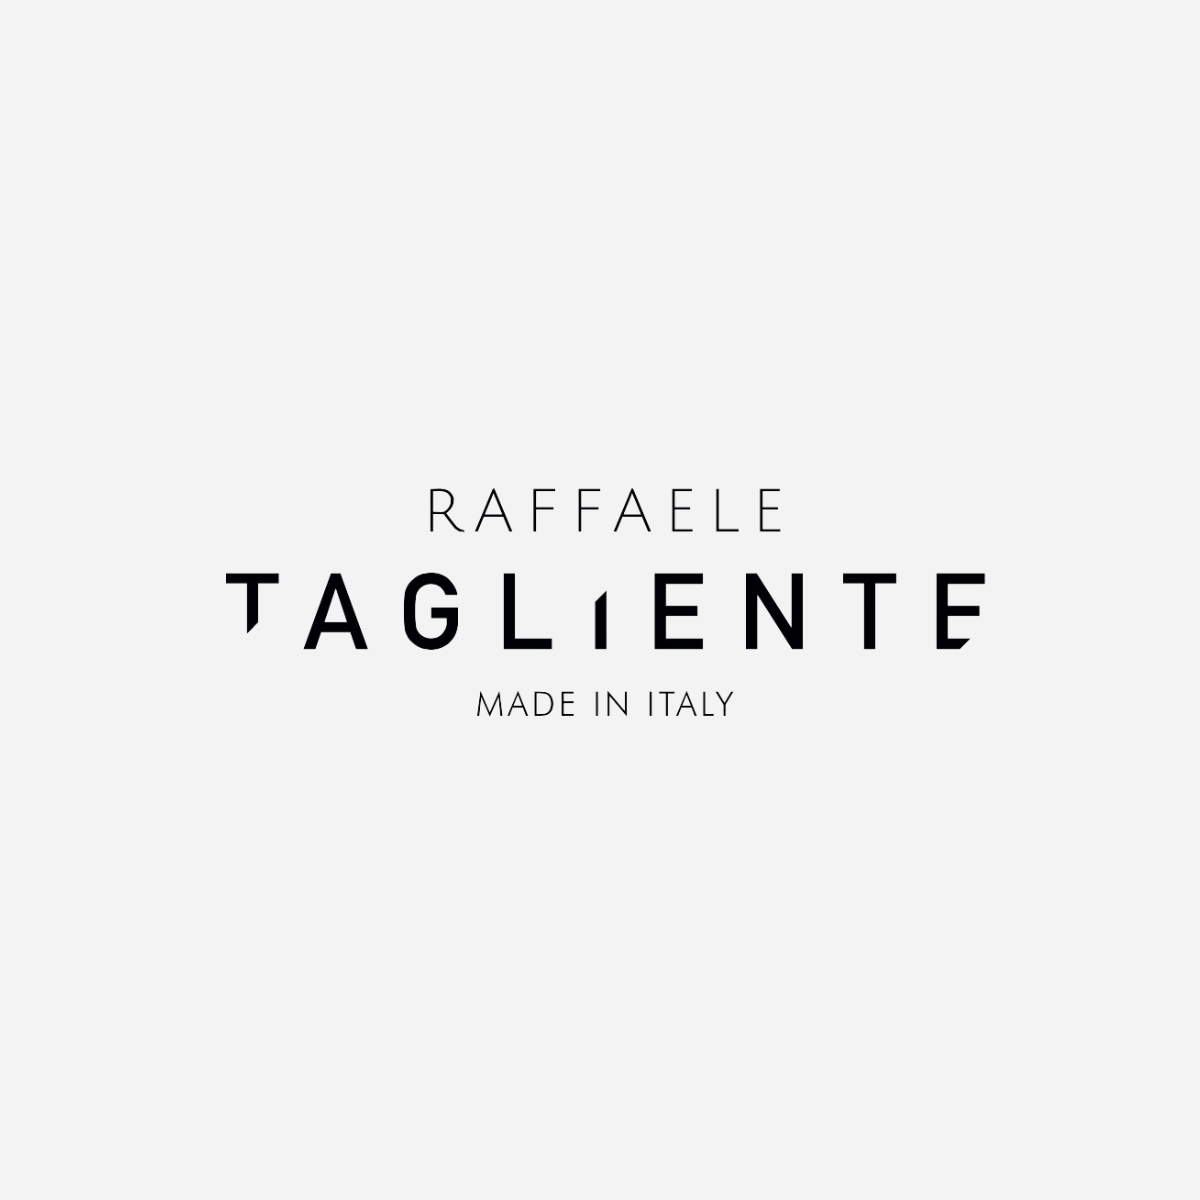 Raffaele Tagliente